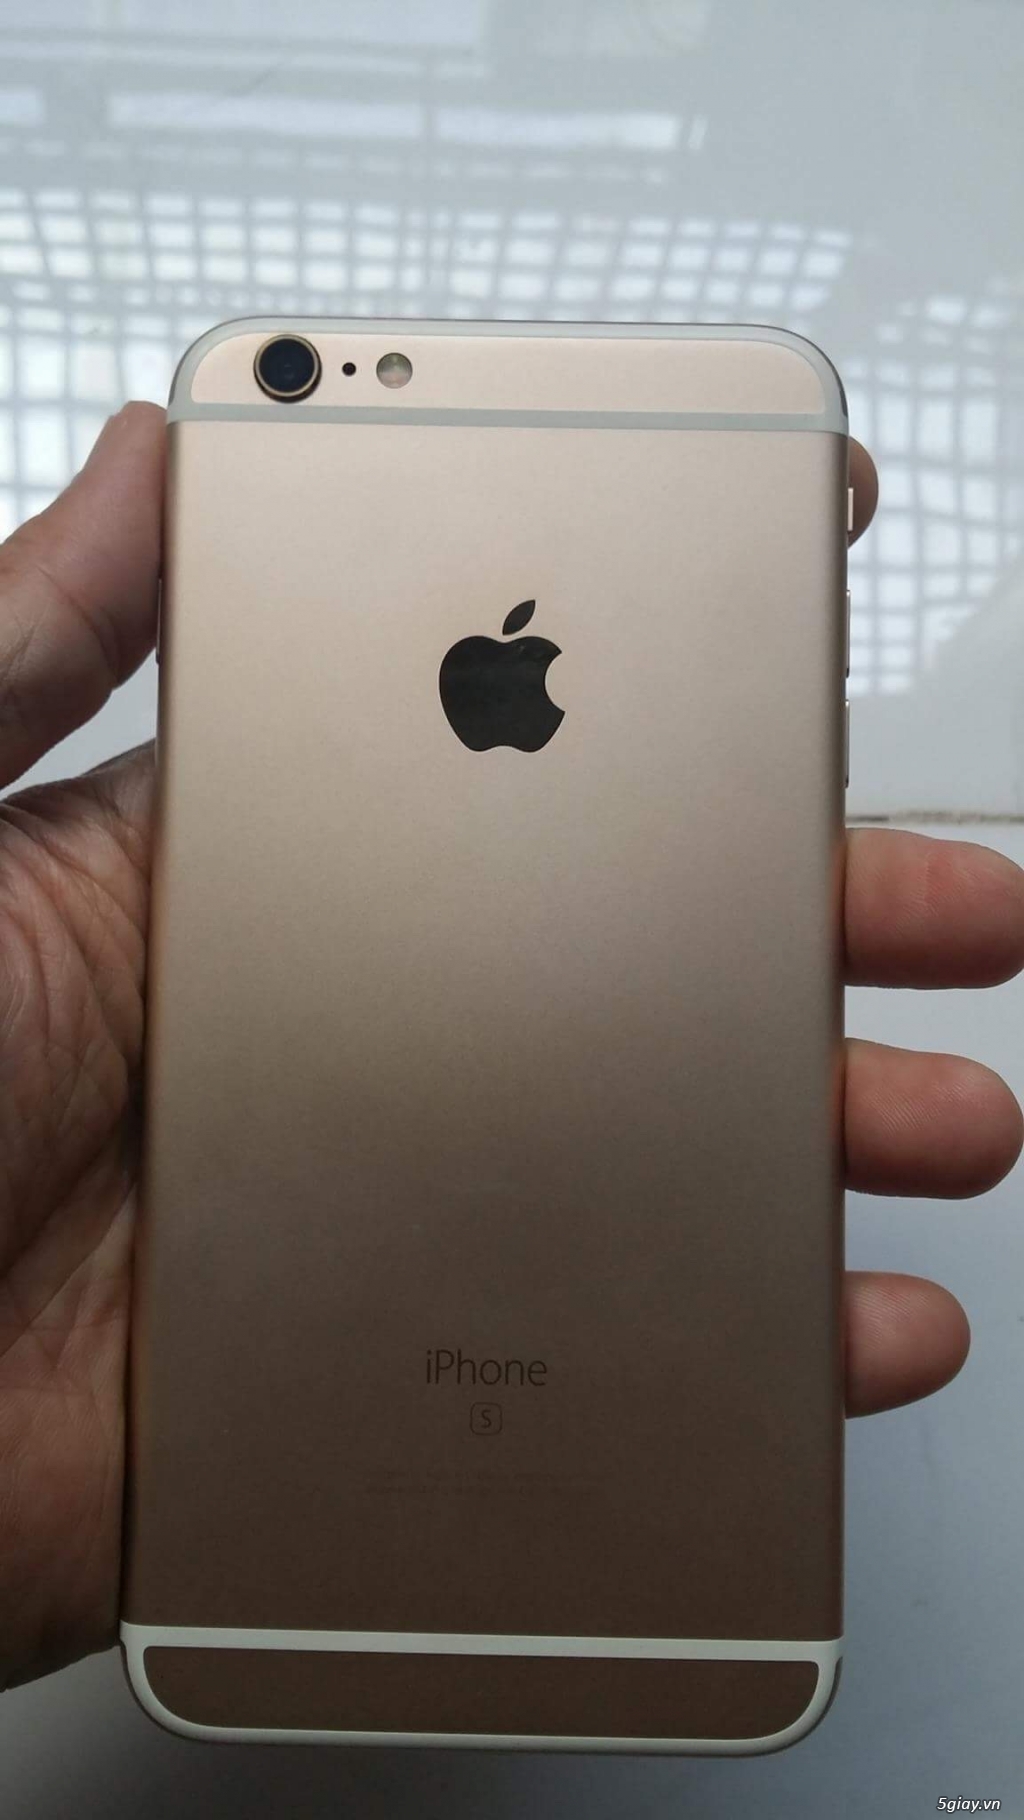 Iphone 6s plus 64gb gold vàng - 3